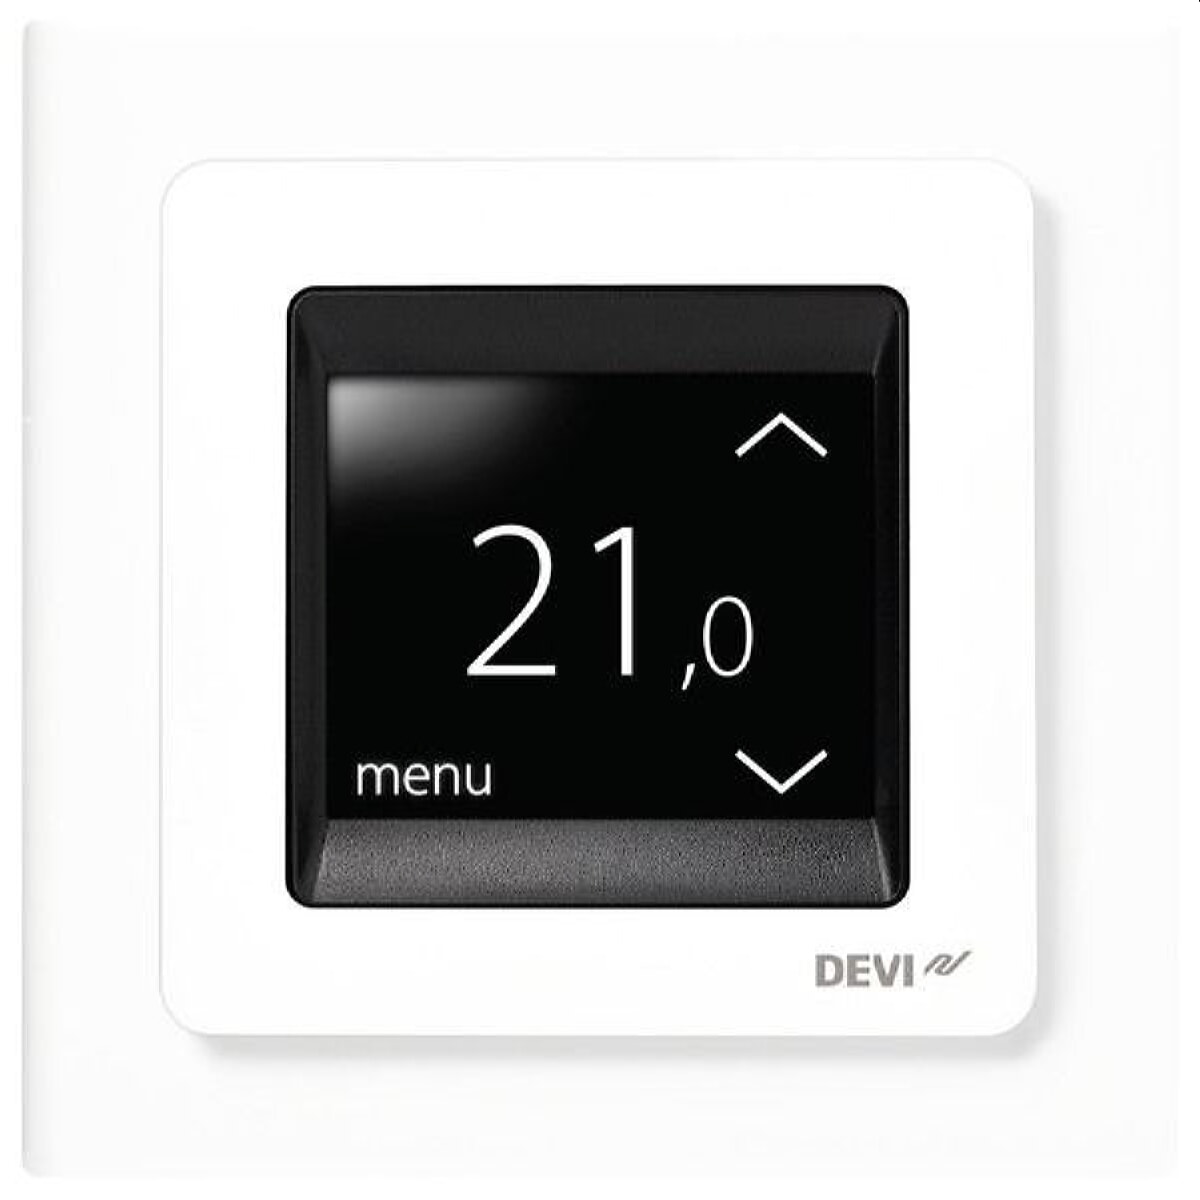 DEVI UP Uhren-Thermostat 140F1064 Devireg Touch 140F1064